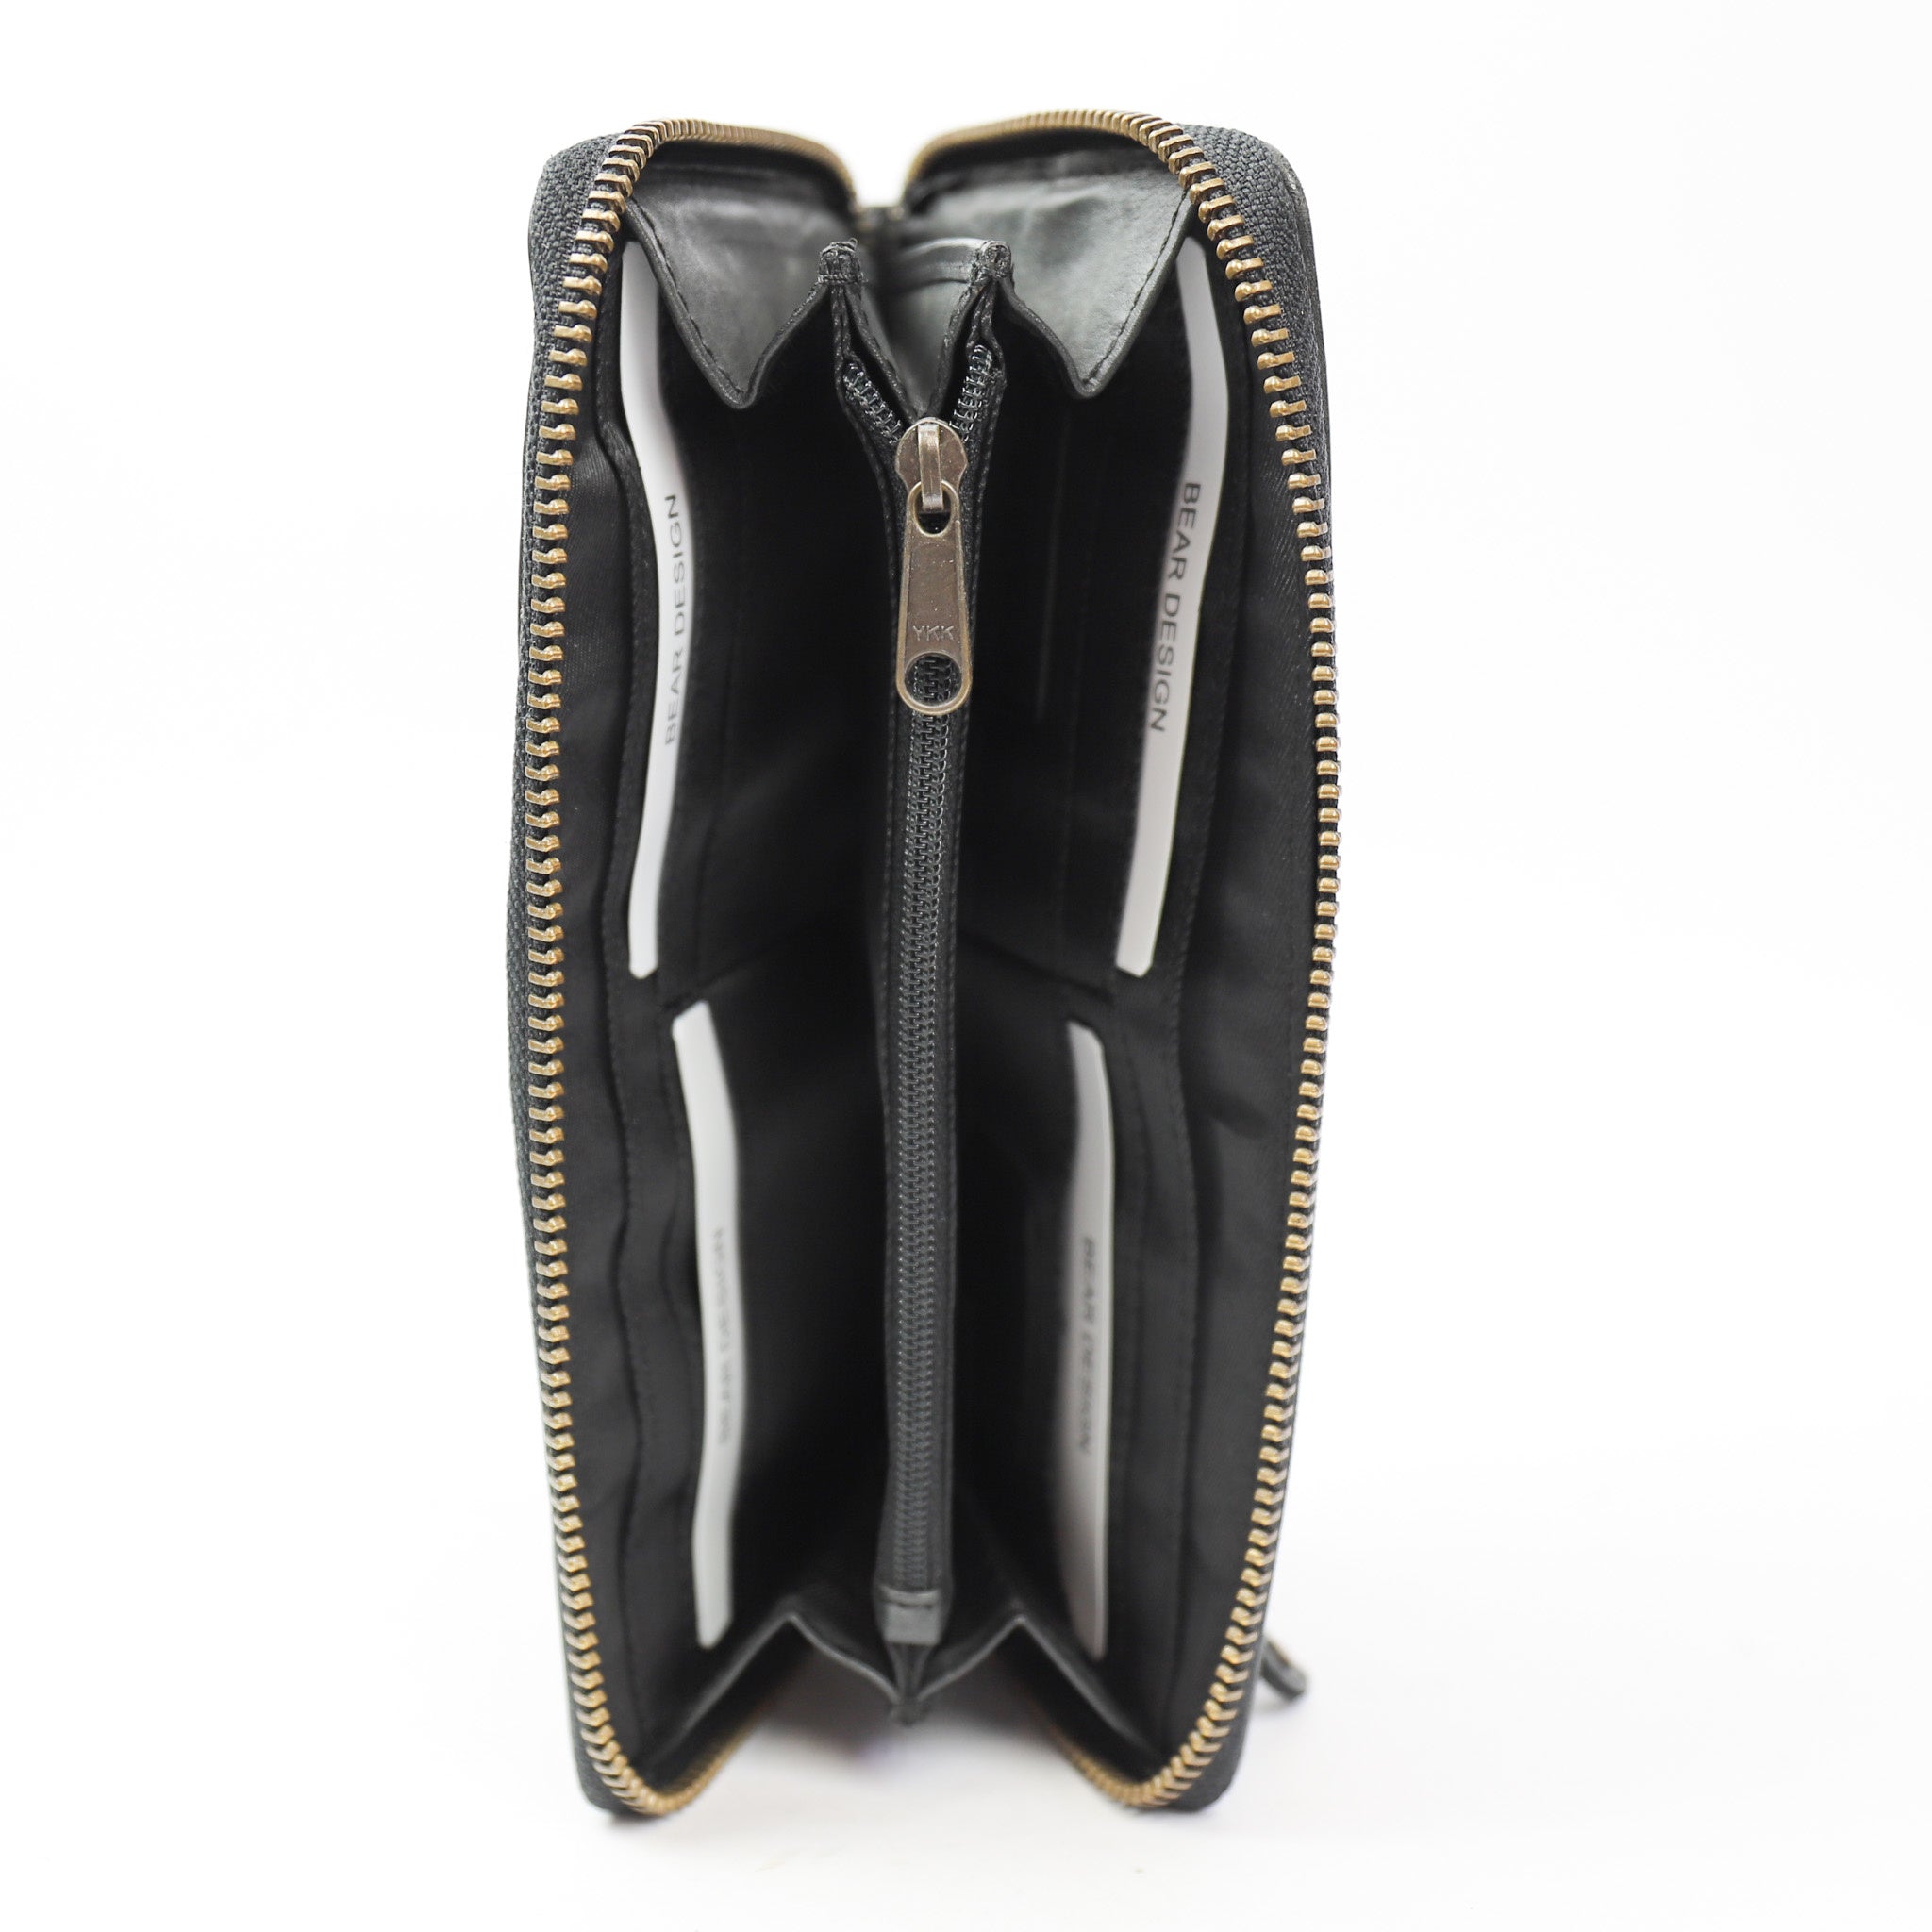 Zipper wallet 'Sofie' black - CL 15882